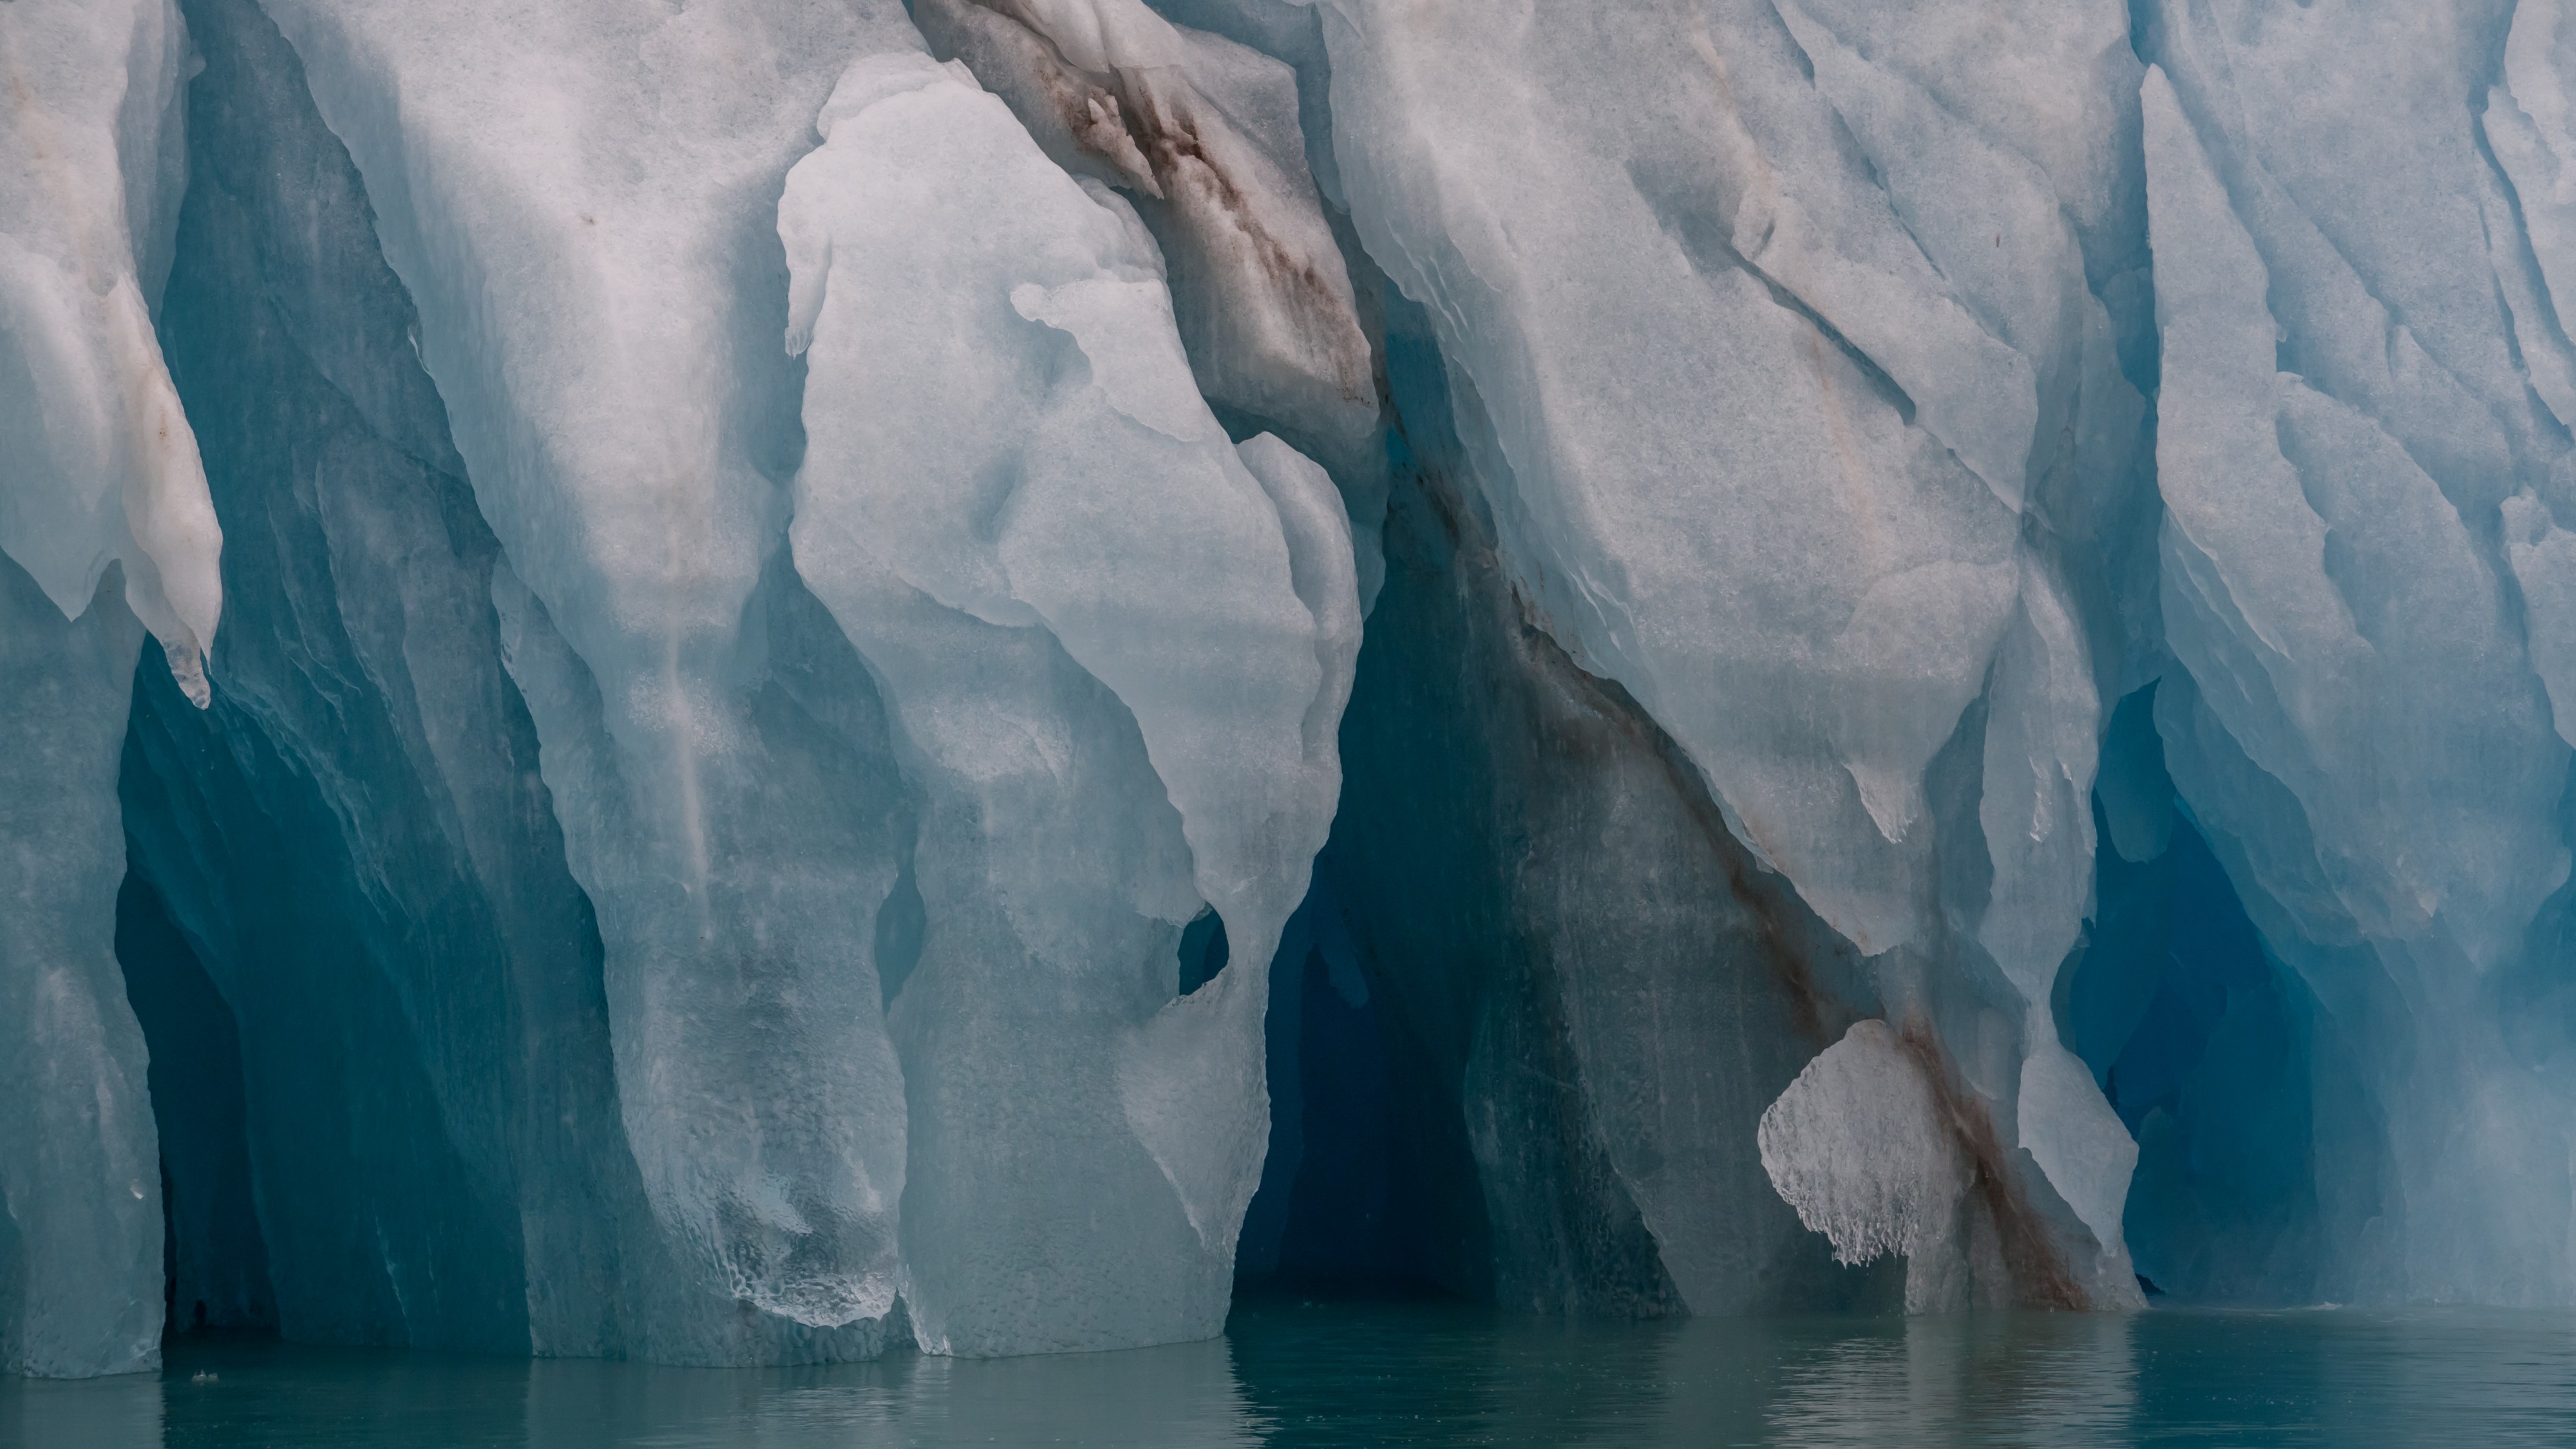 A look inside an iceberg (3), Liefdefjord, Svalbard